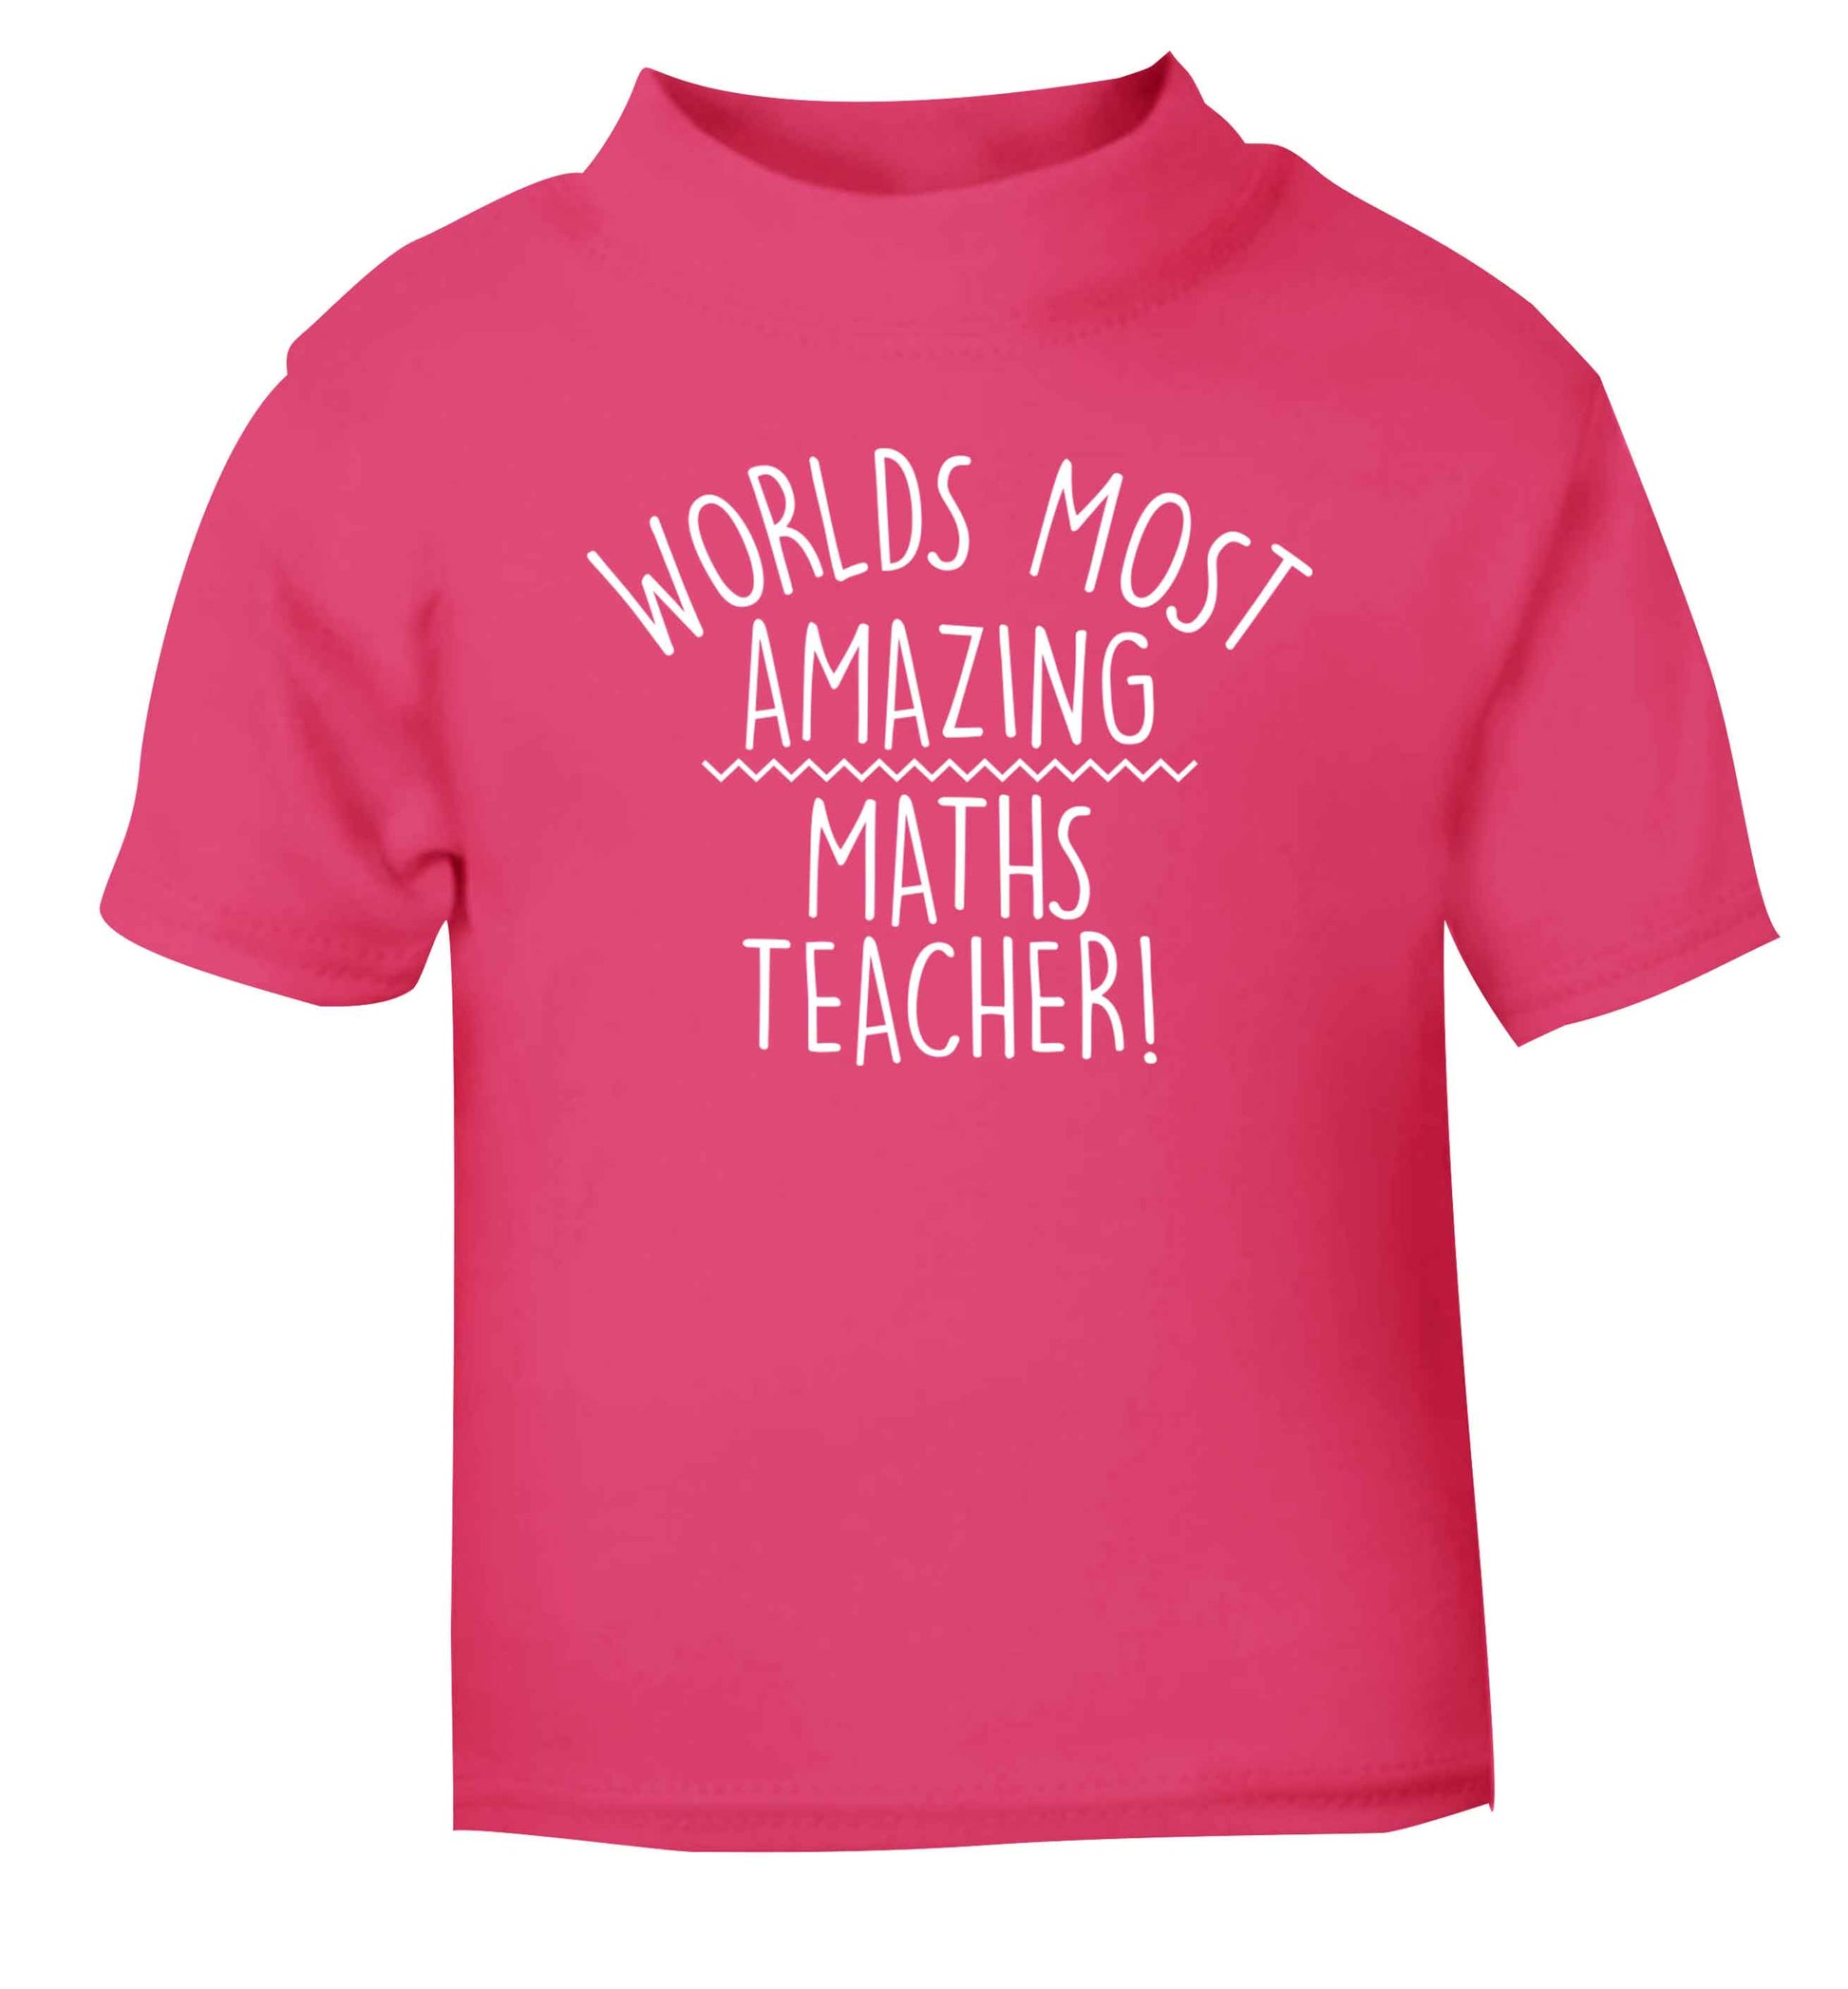 Worlds most amazing maths teacher pink baby toddler Tshirt 2 Years